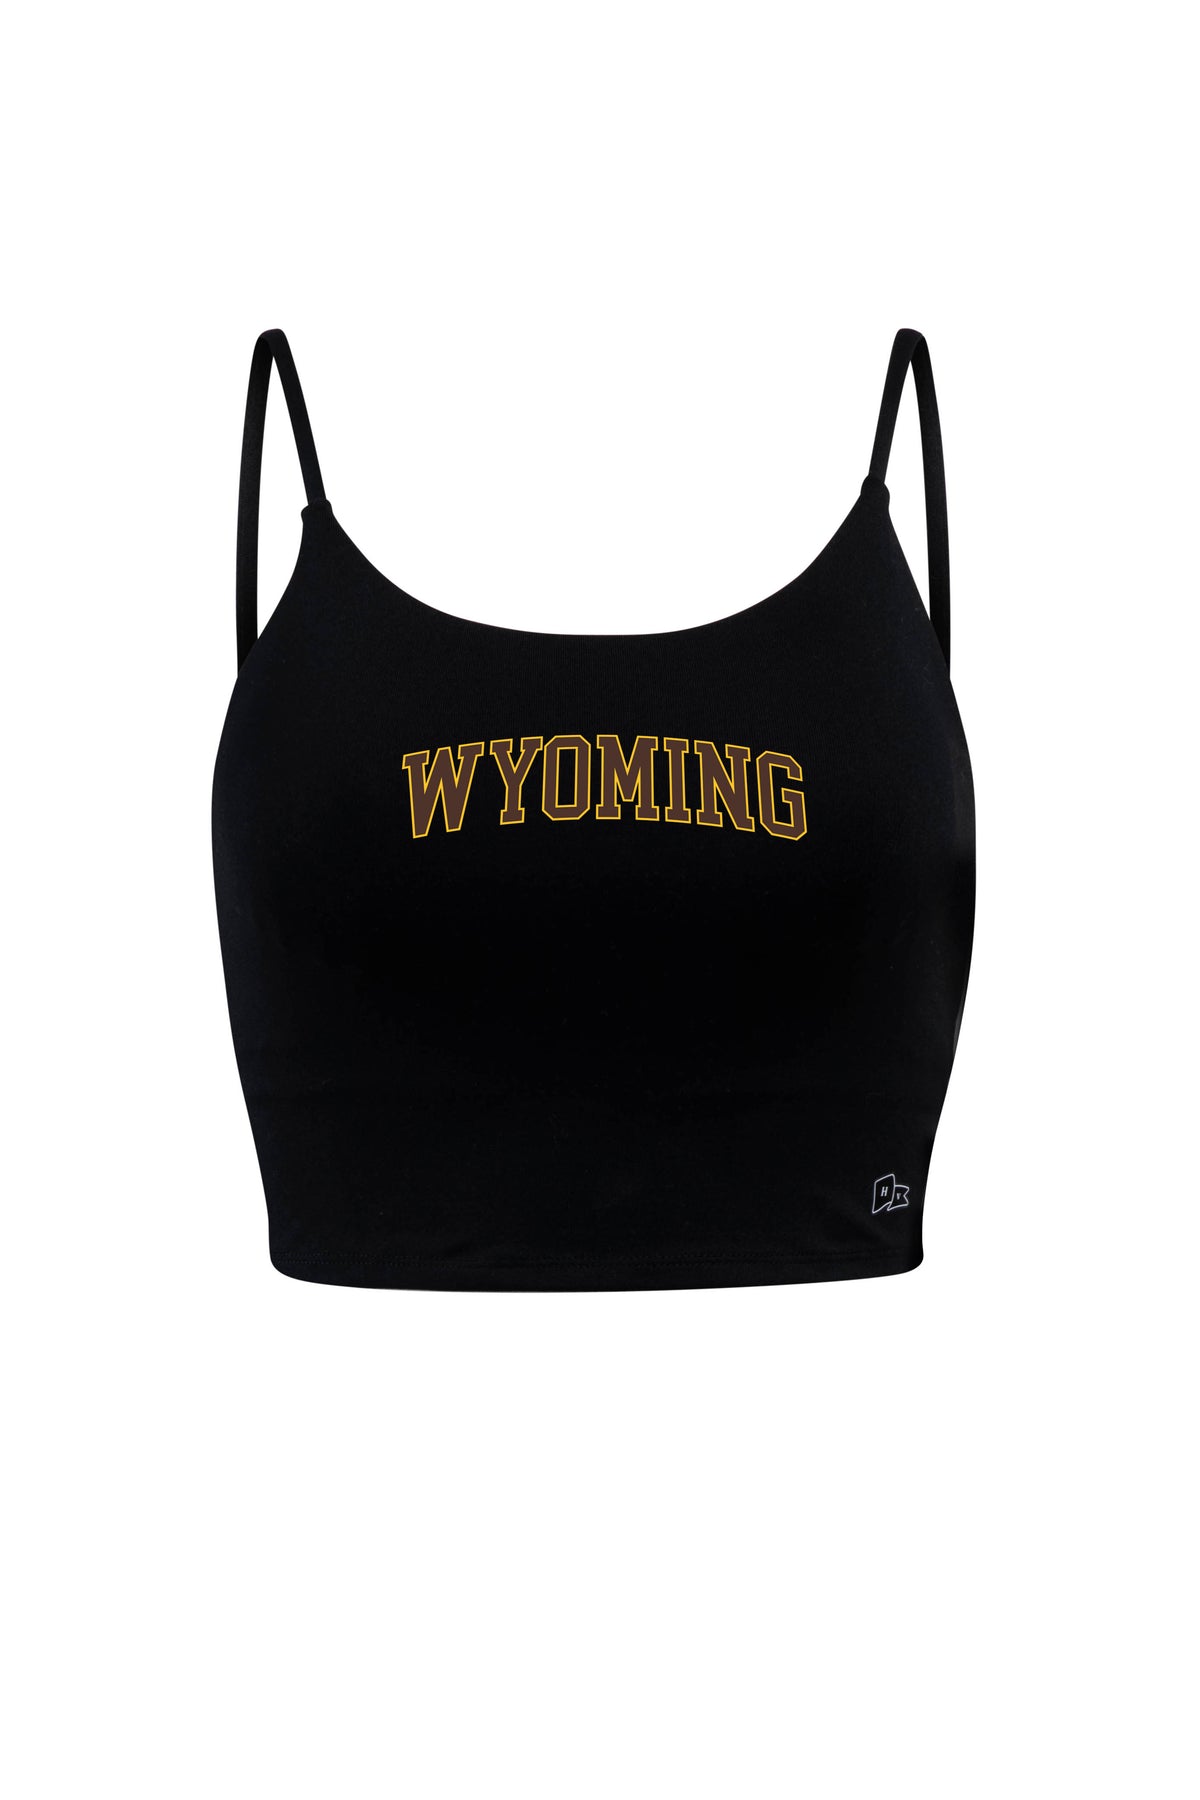 University of Wyoming Bra Tank Top